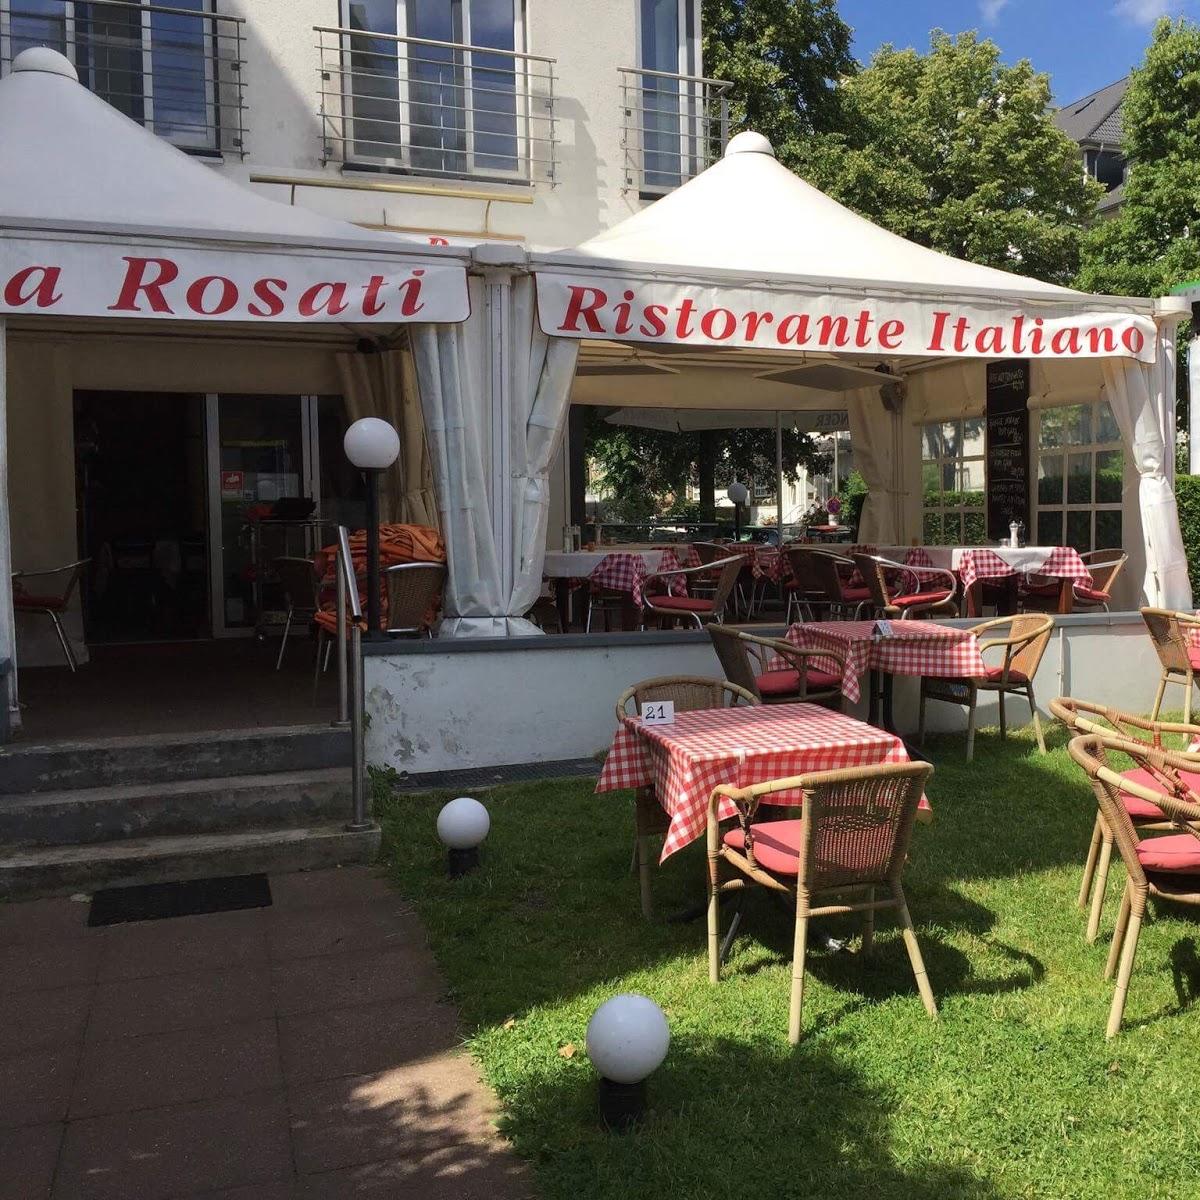 Restaurant "Trattoria Rosati" in Hamburg